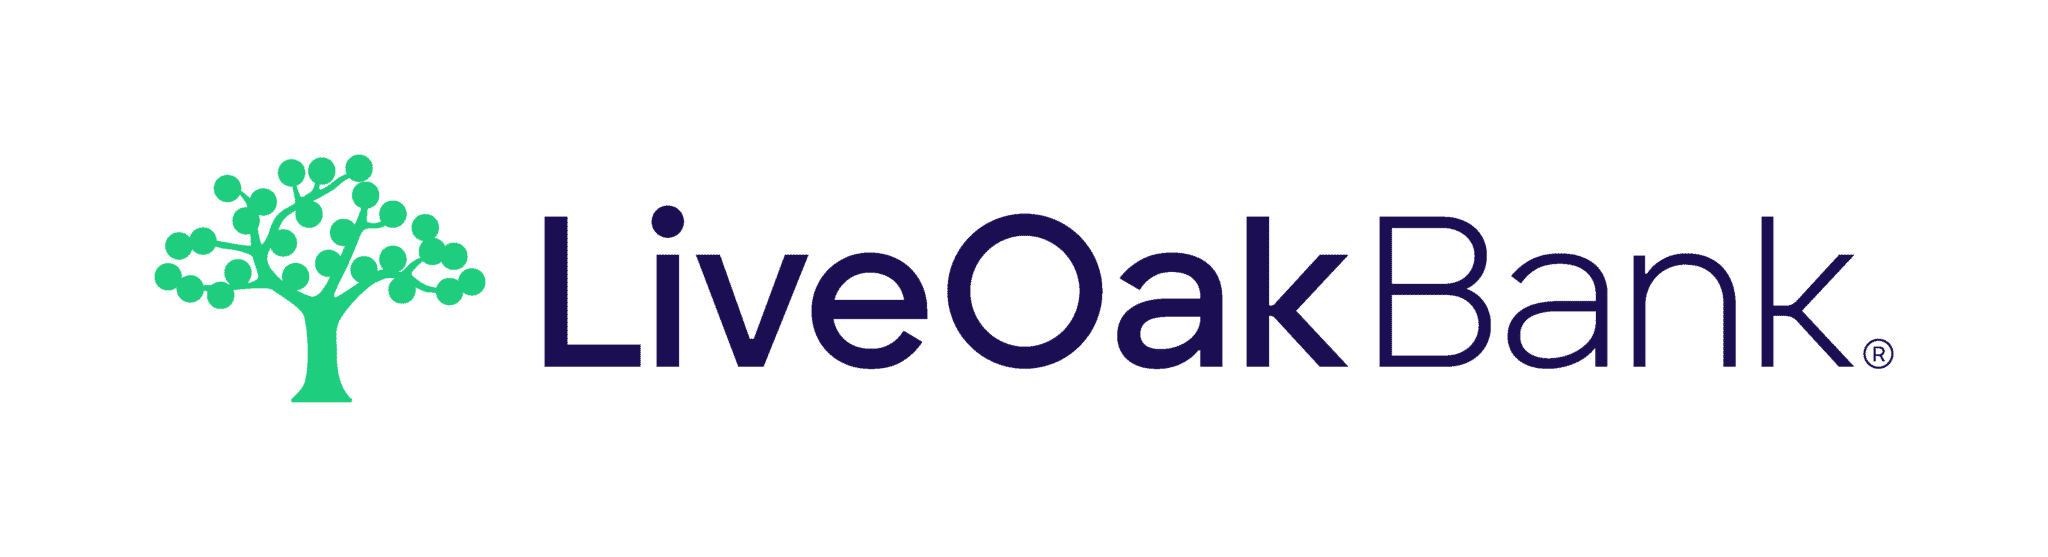 Live Oak Bank 6-month Business CD